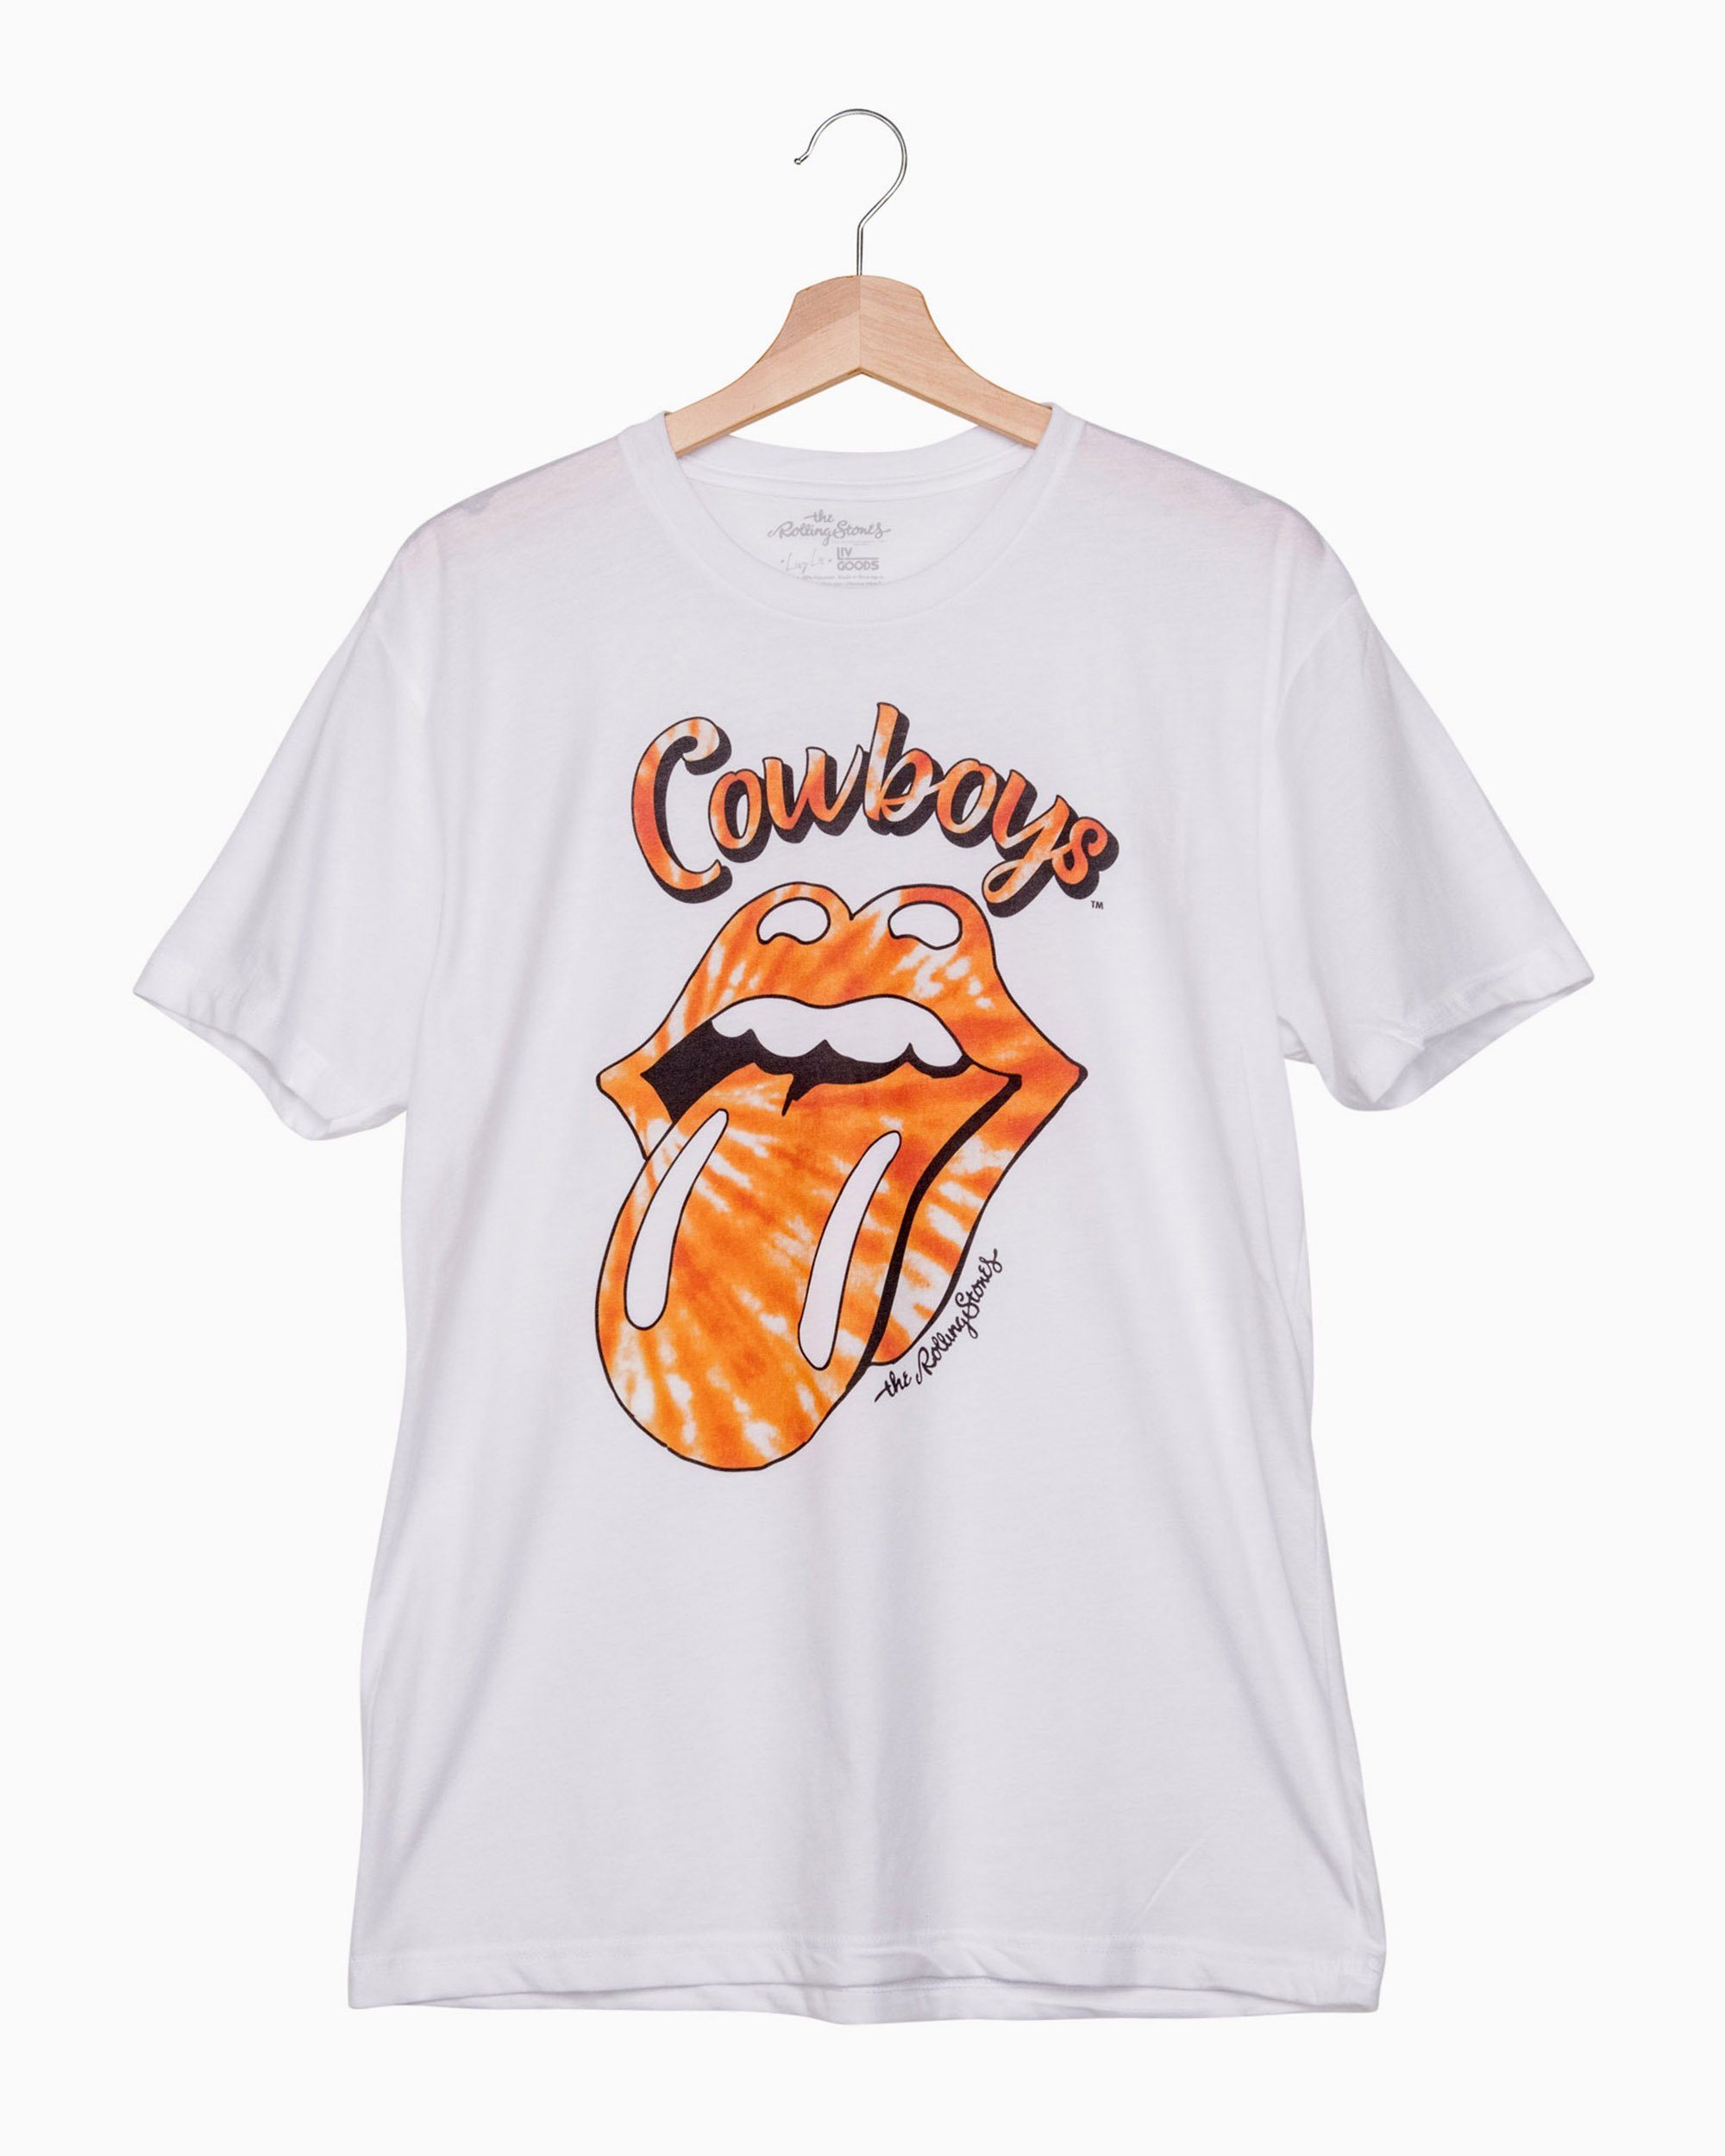 Rolling Stones Cowboys Tie Dye Lick White Tee (4522437541991)